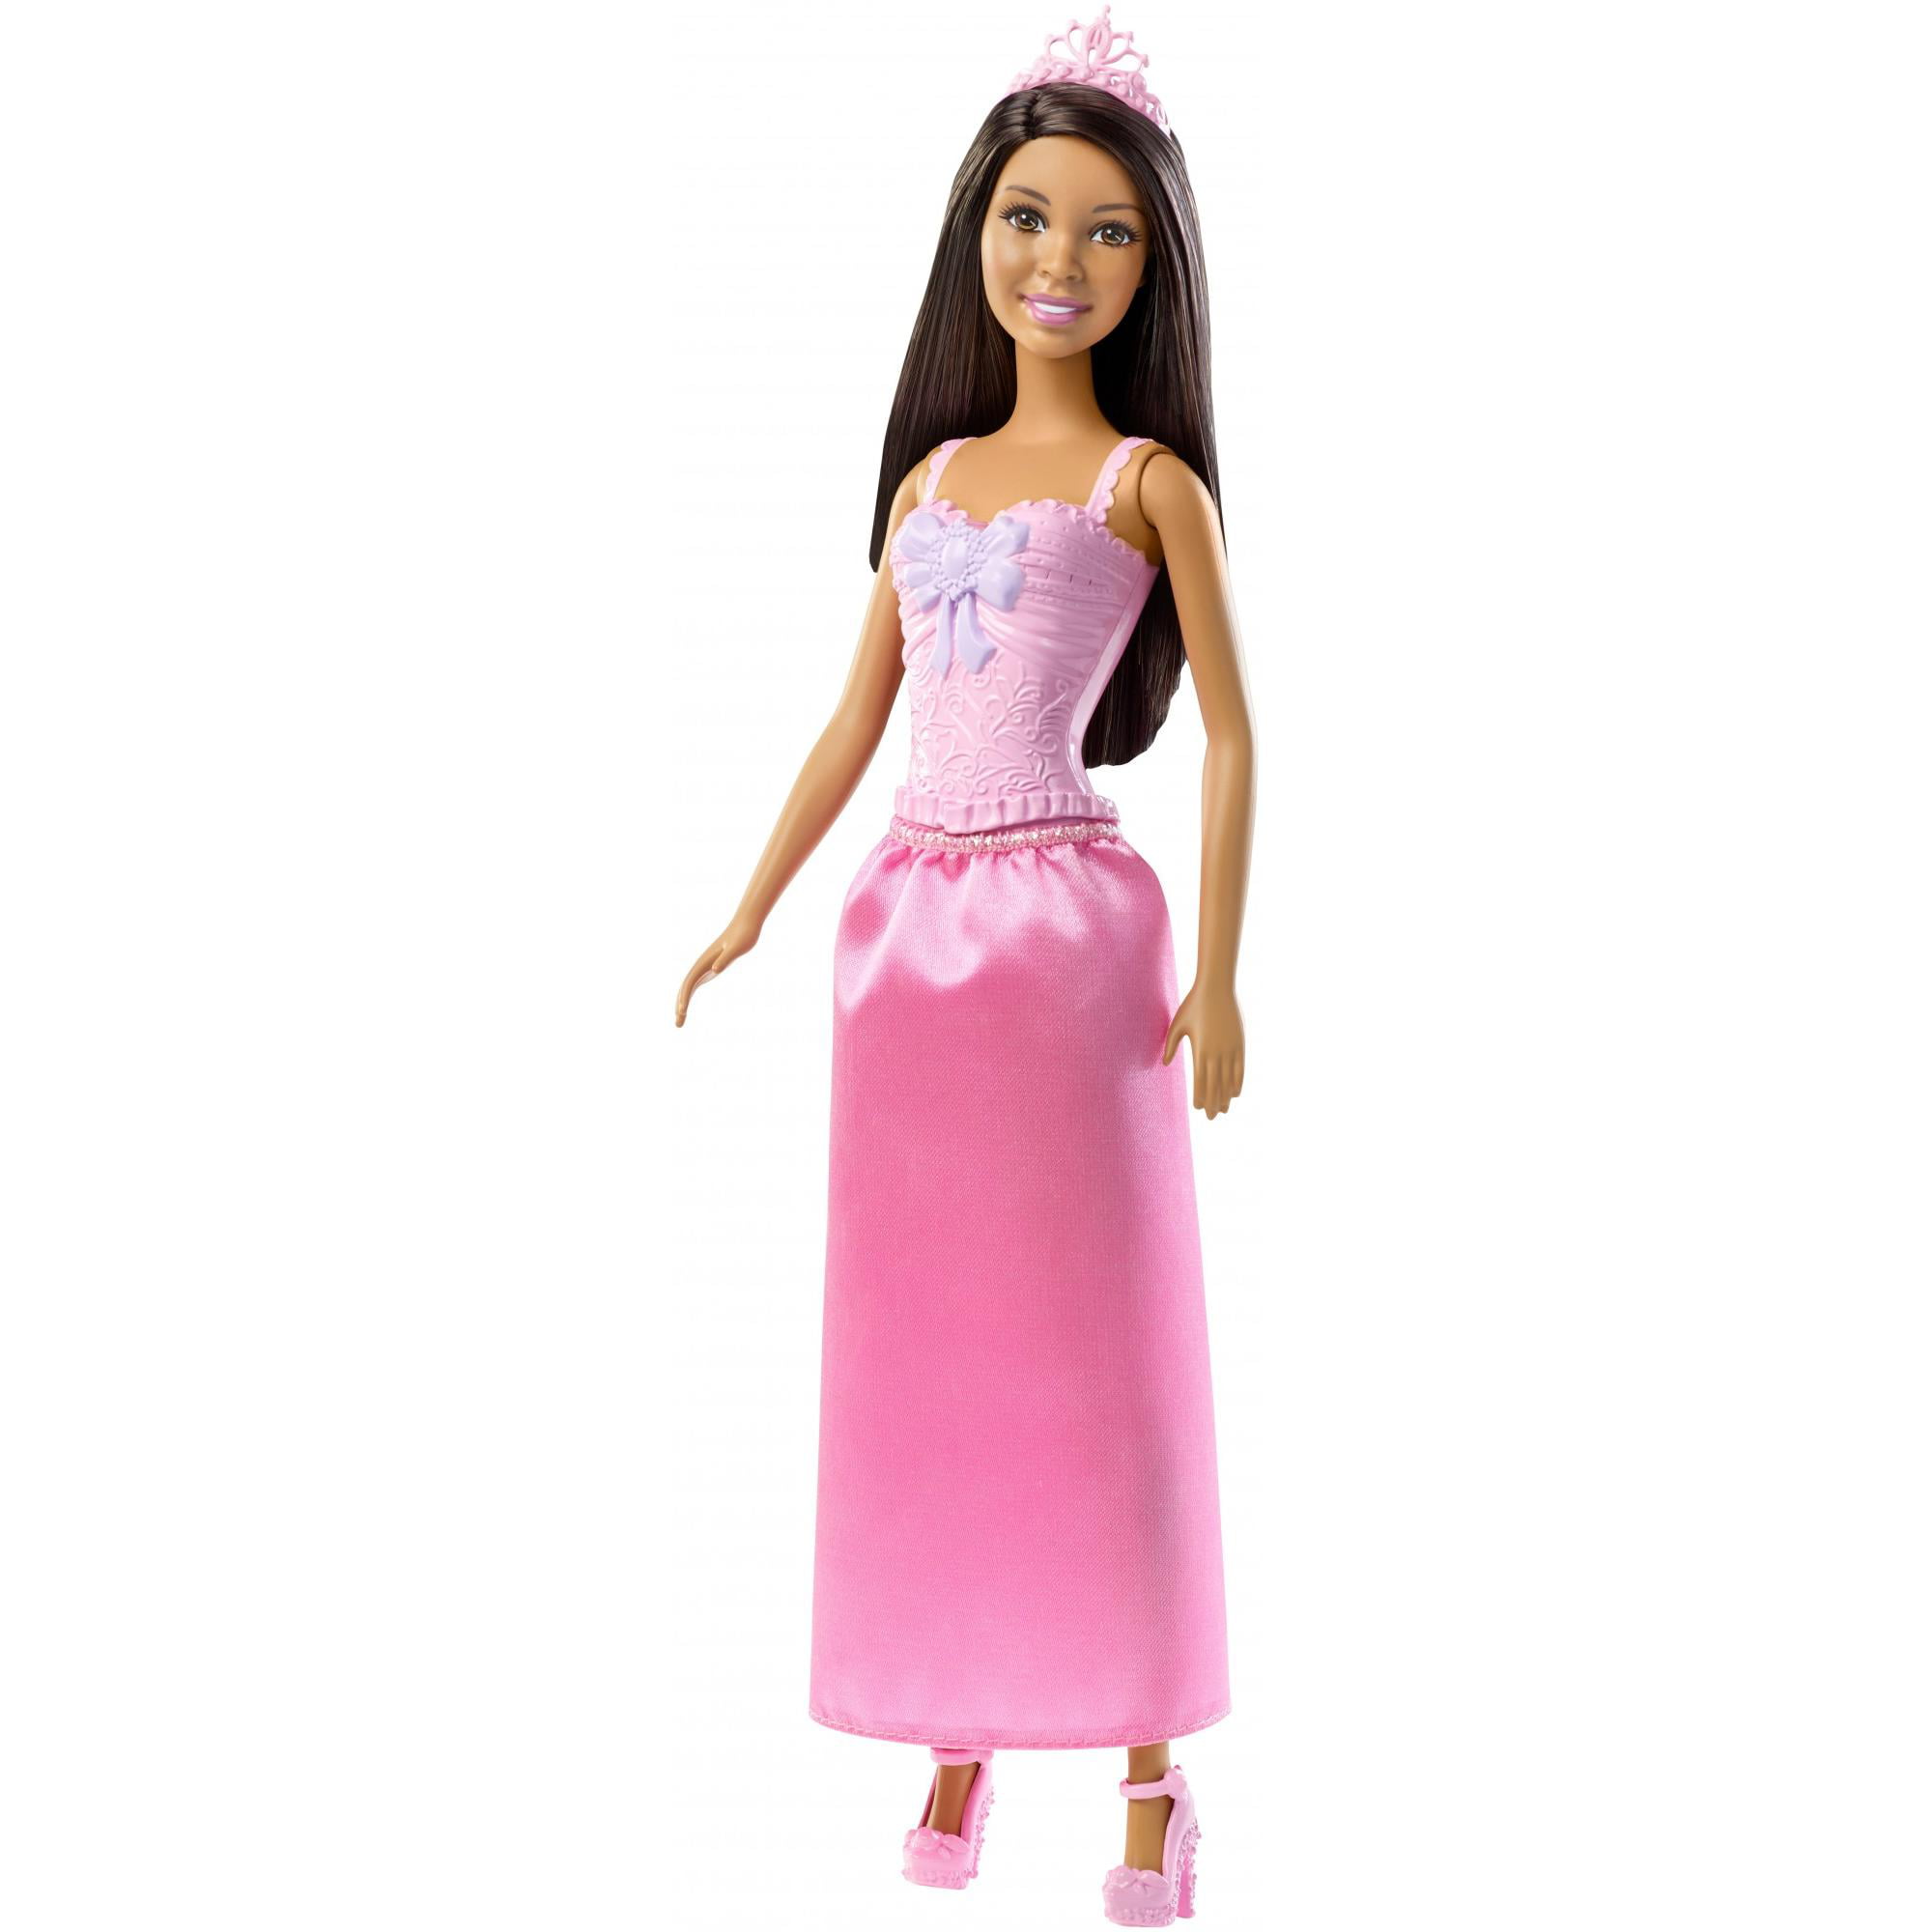 barbie princess barbie princess barbie princess barbie princess